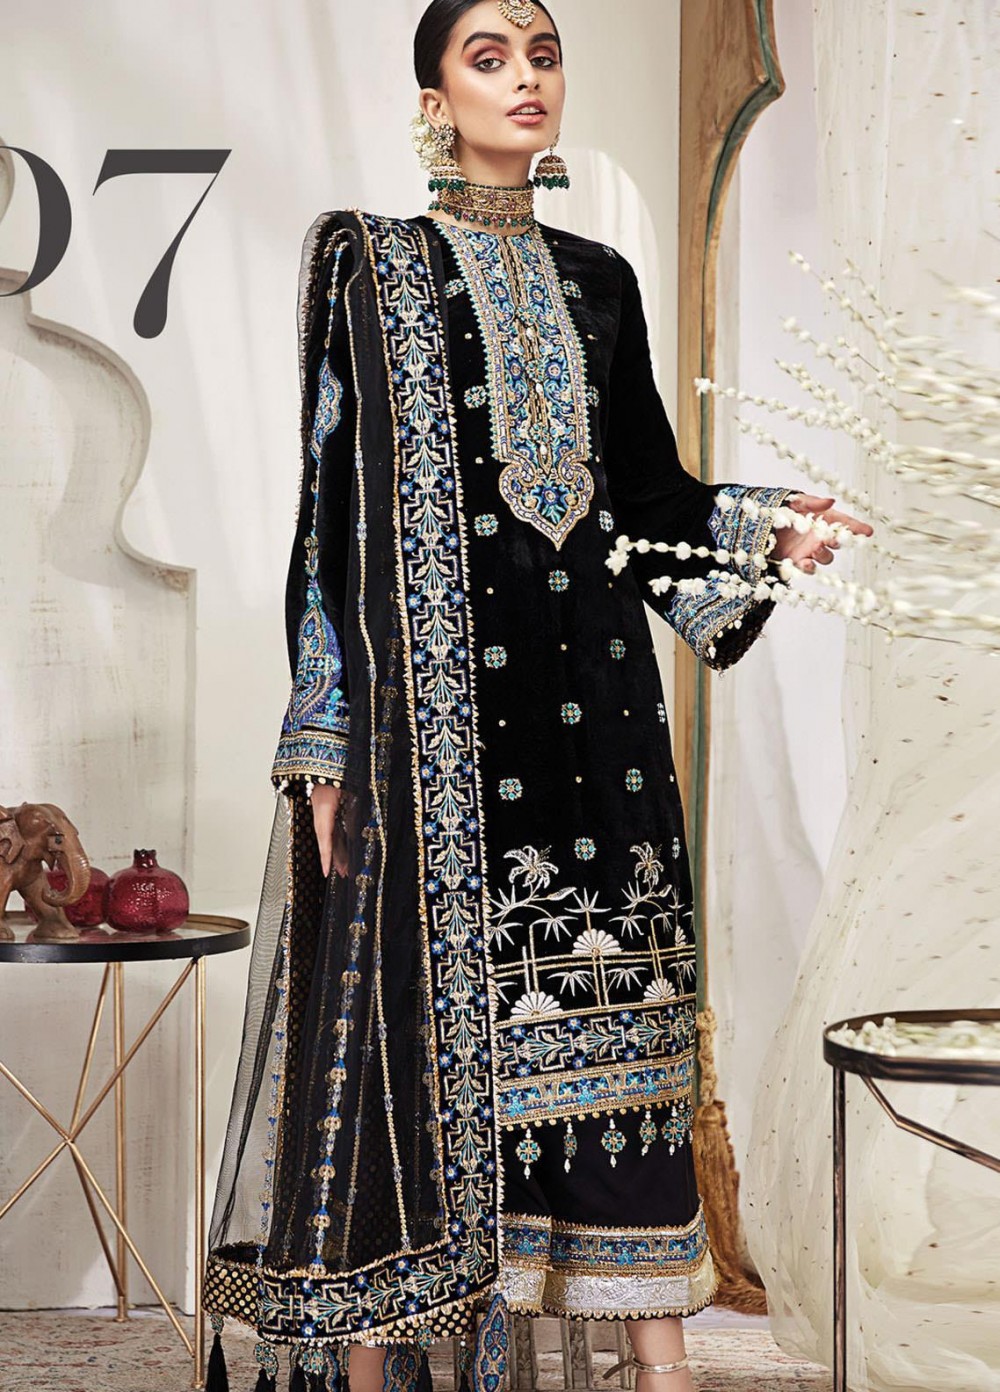 Anaya Layla haseen velvet 3pcs dress with gorgeous details